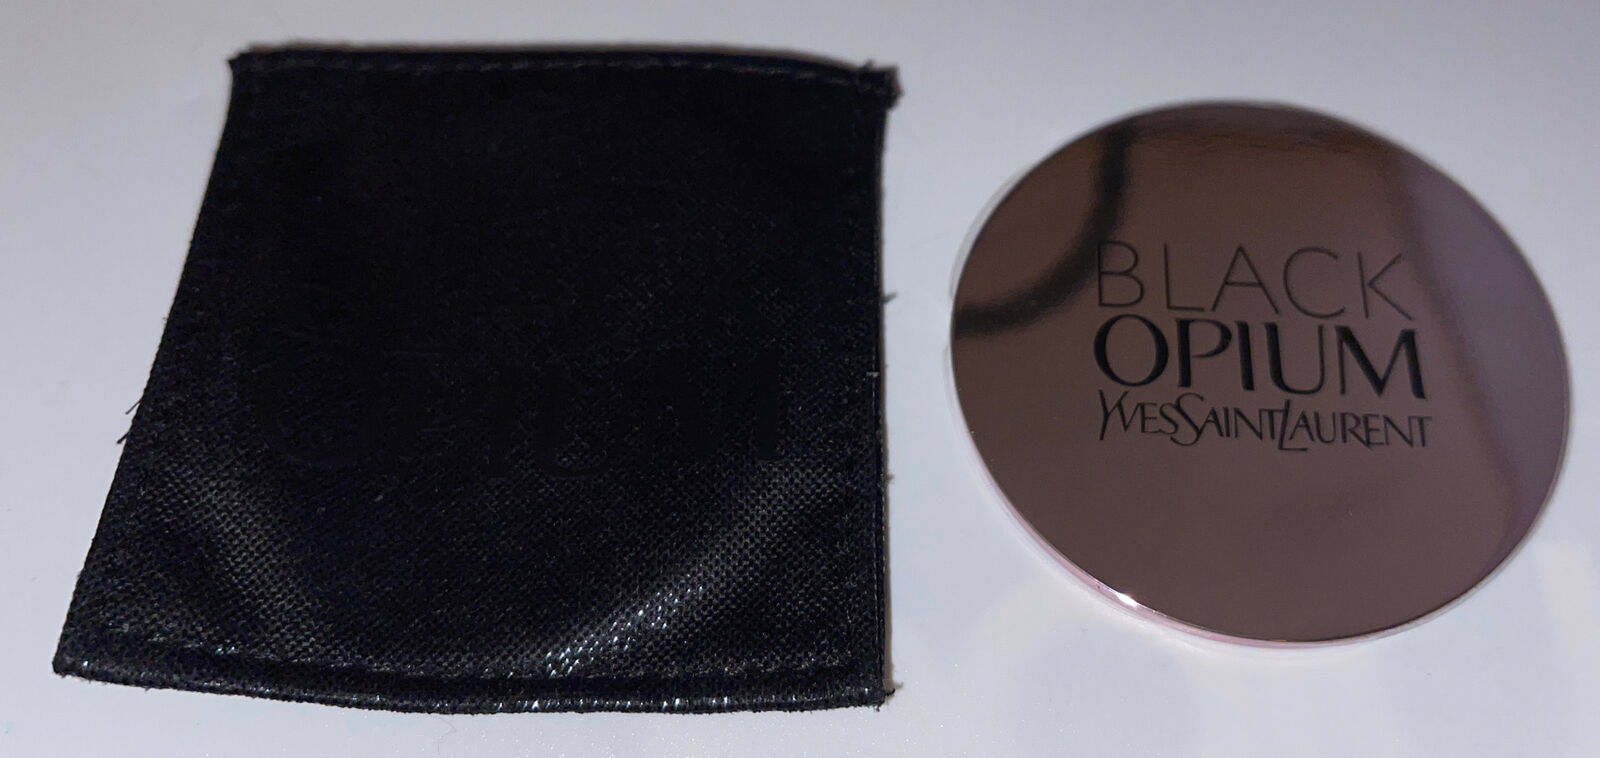 Black Opium Pocket Mirror - Repurposed Magazine YSL Perfume Ad Lipstick Mirror